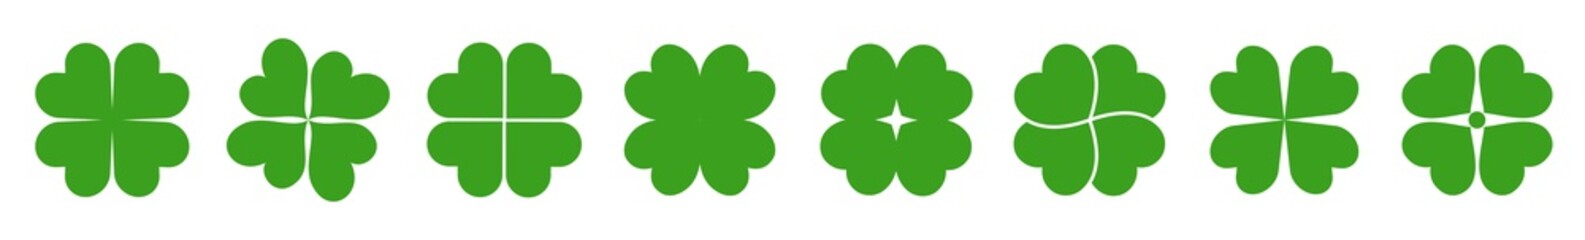 Shamrock Icon Green | Shamrocks | Four Leaf Clover | Irish Symbol | St Patrick's Day Logo | Luck Sign | Isolated | Variations